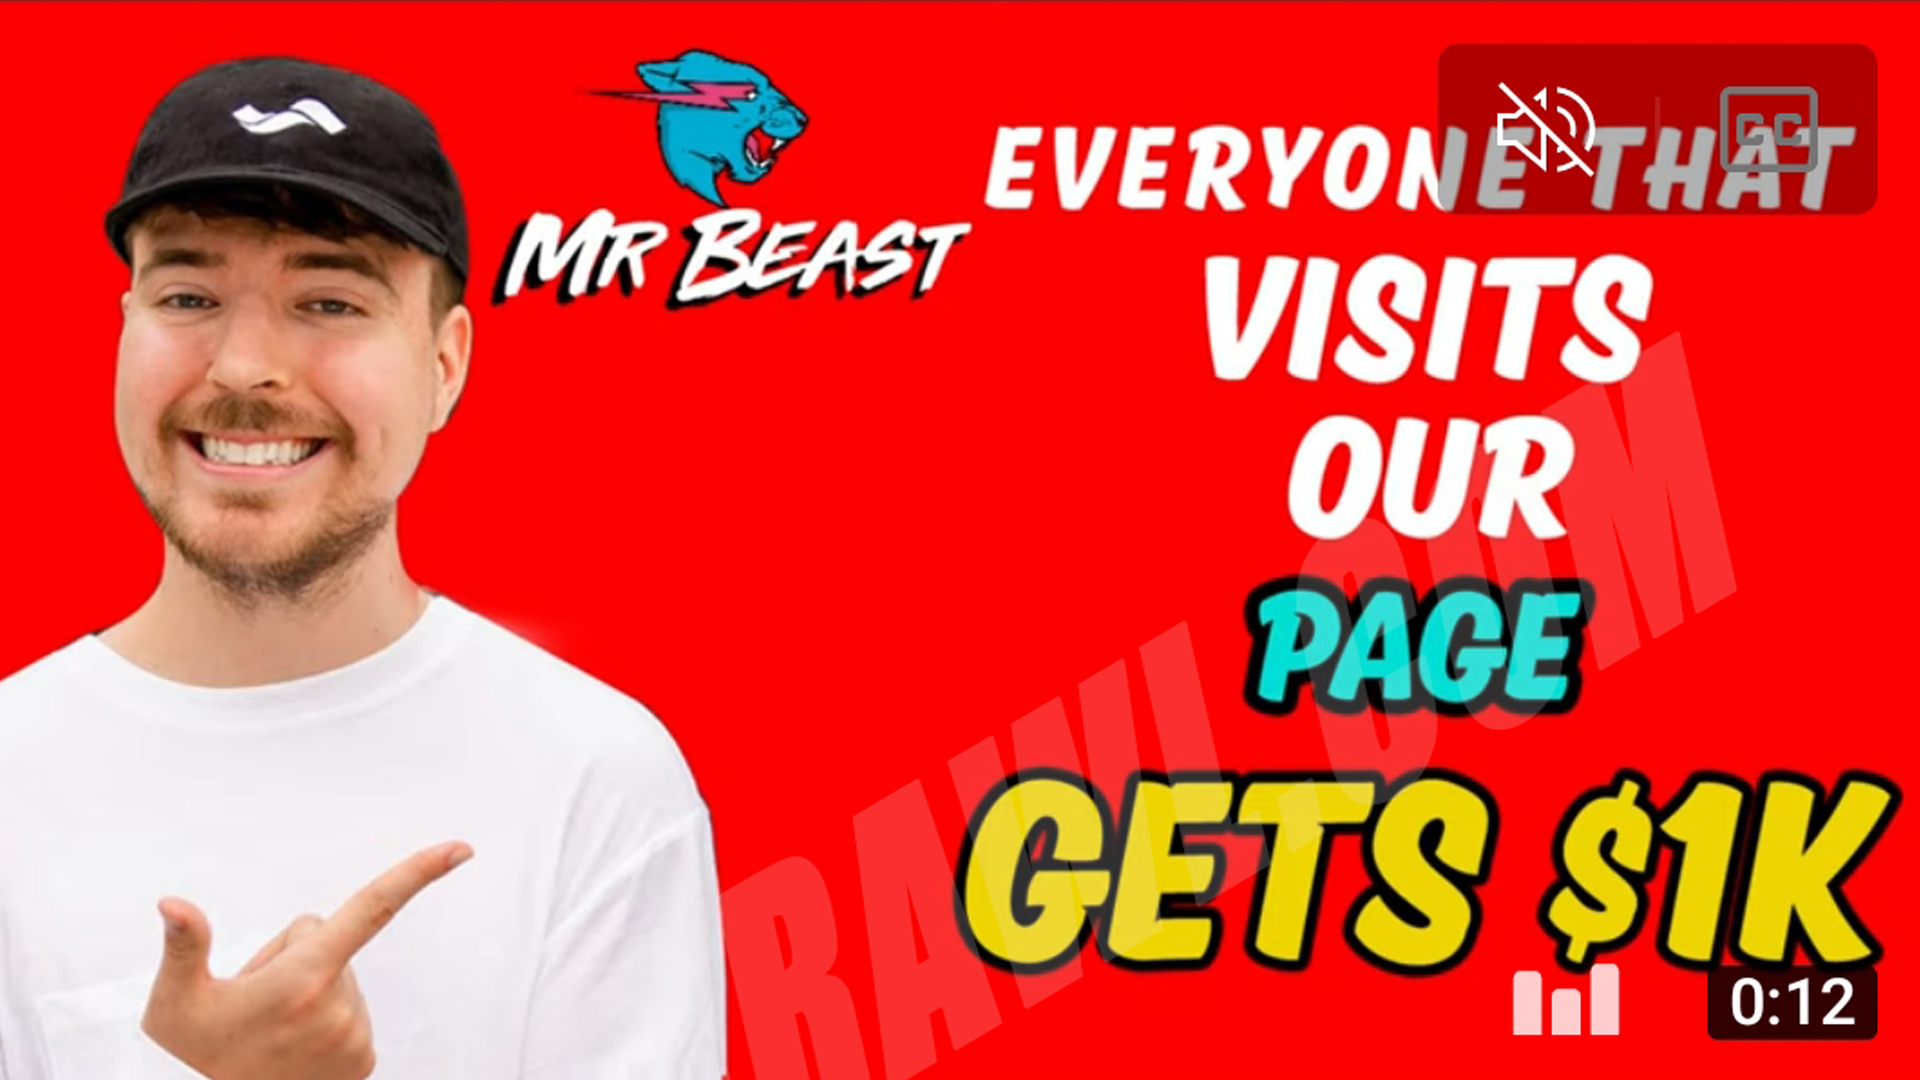 mr beast website scam